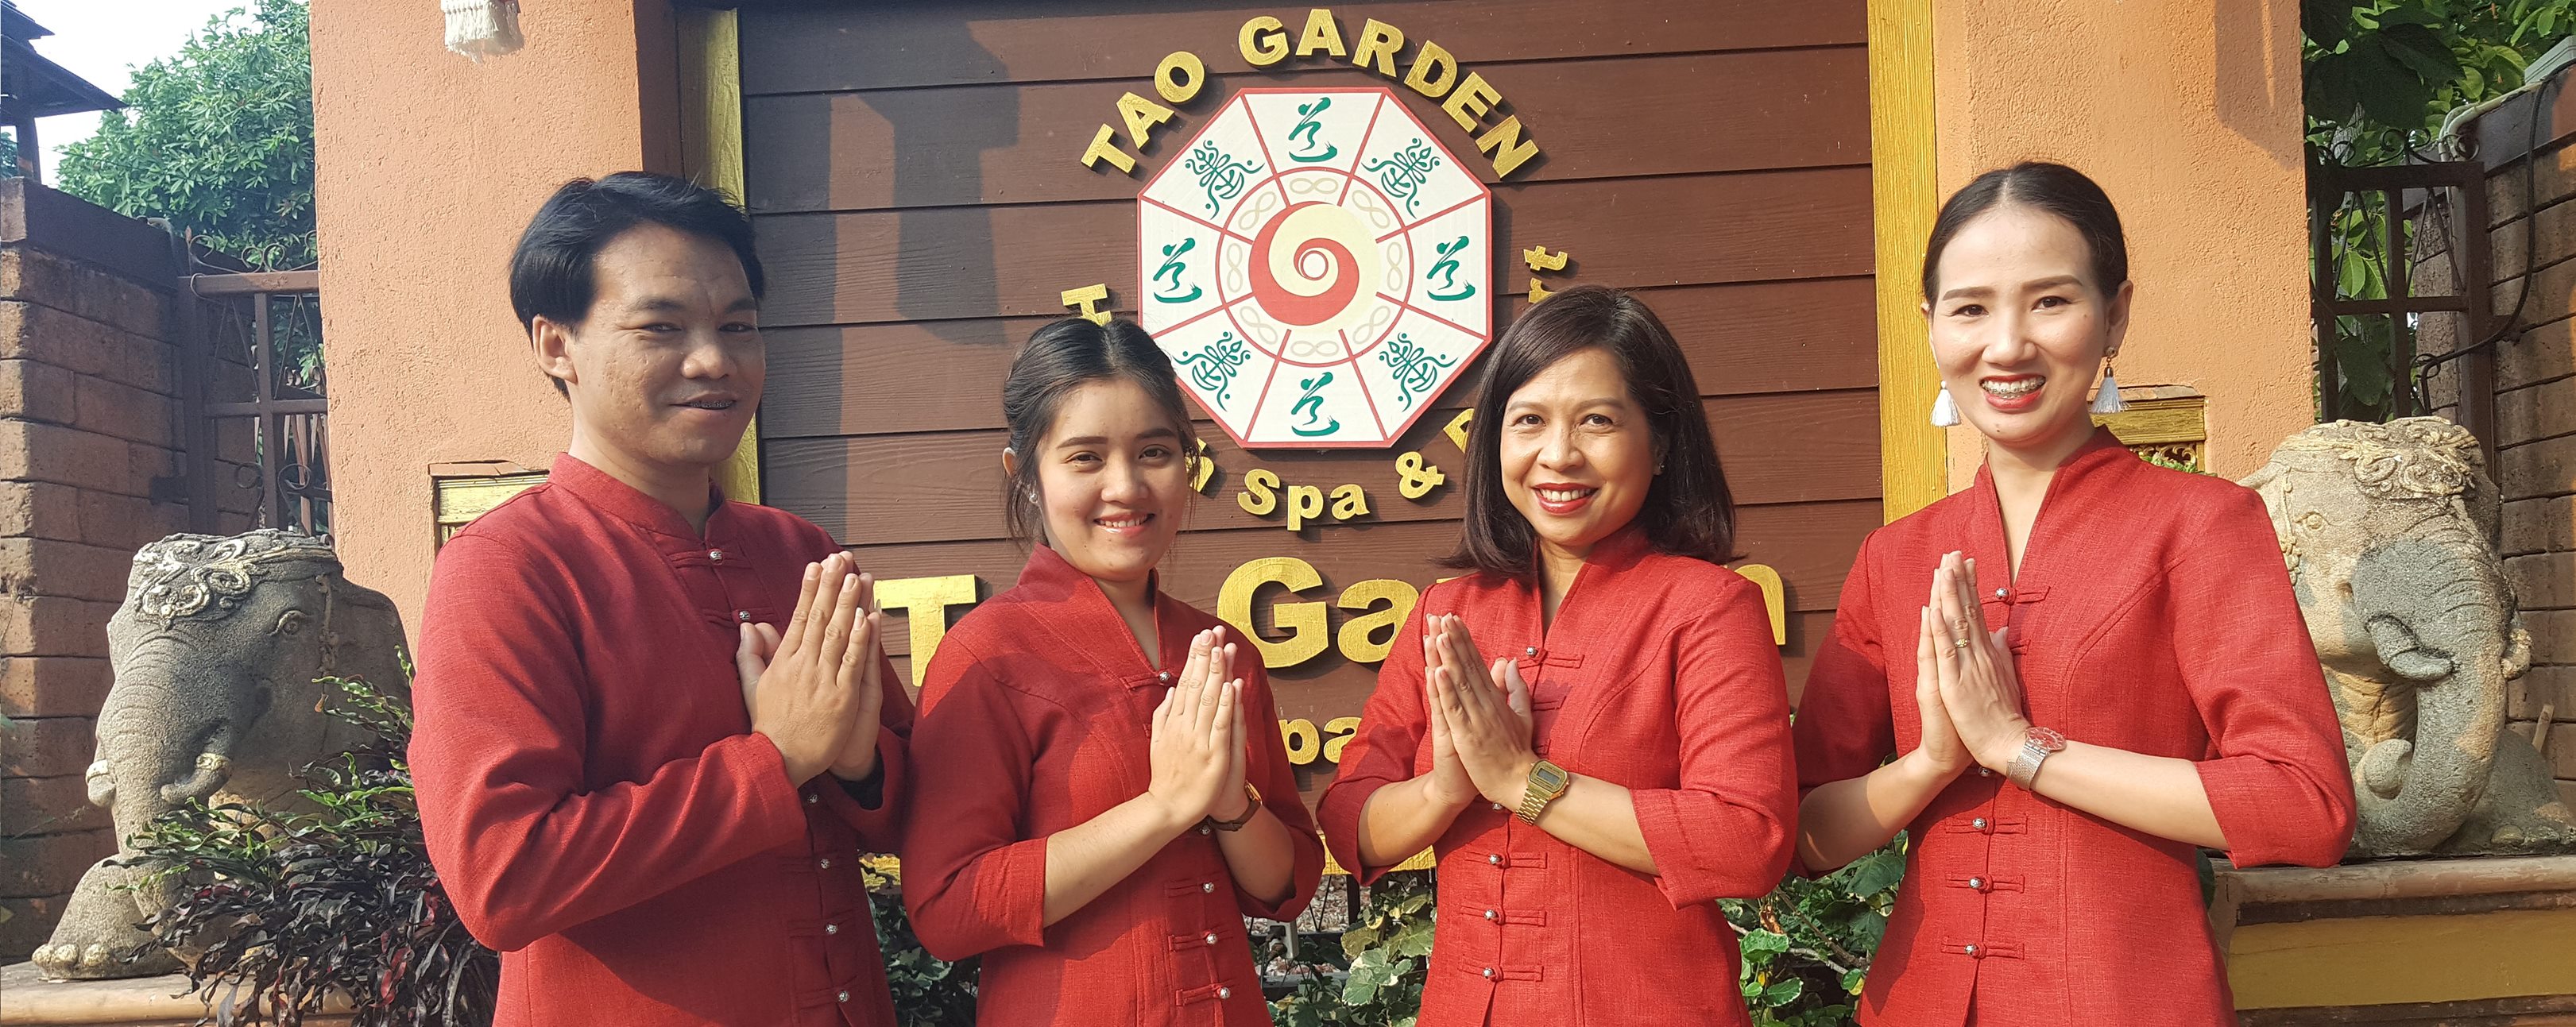 Tao Garden Health Spa And Resort Image